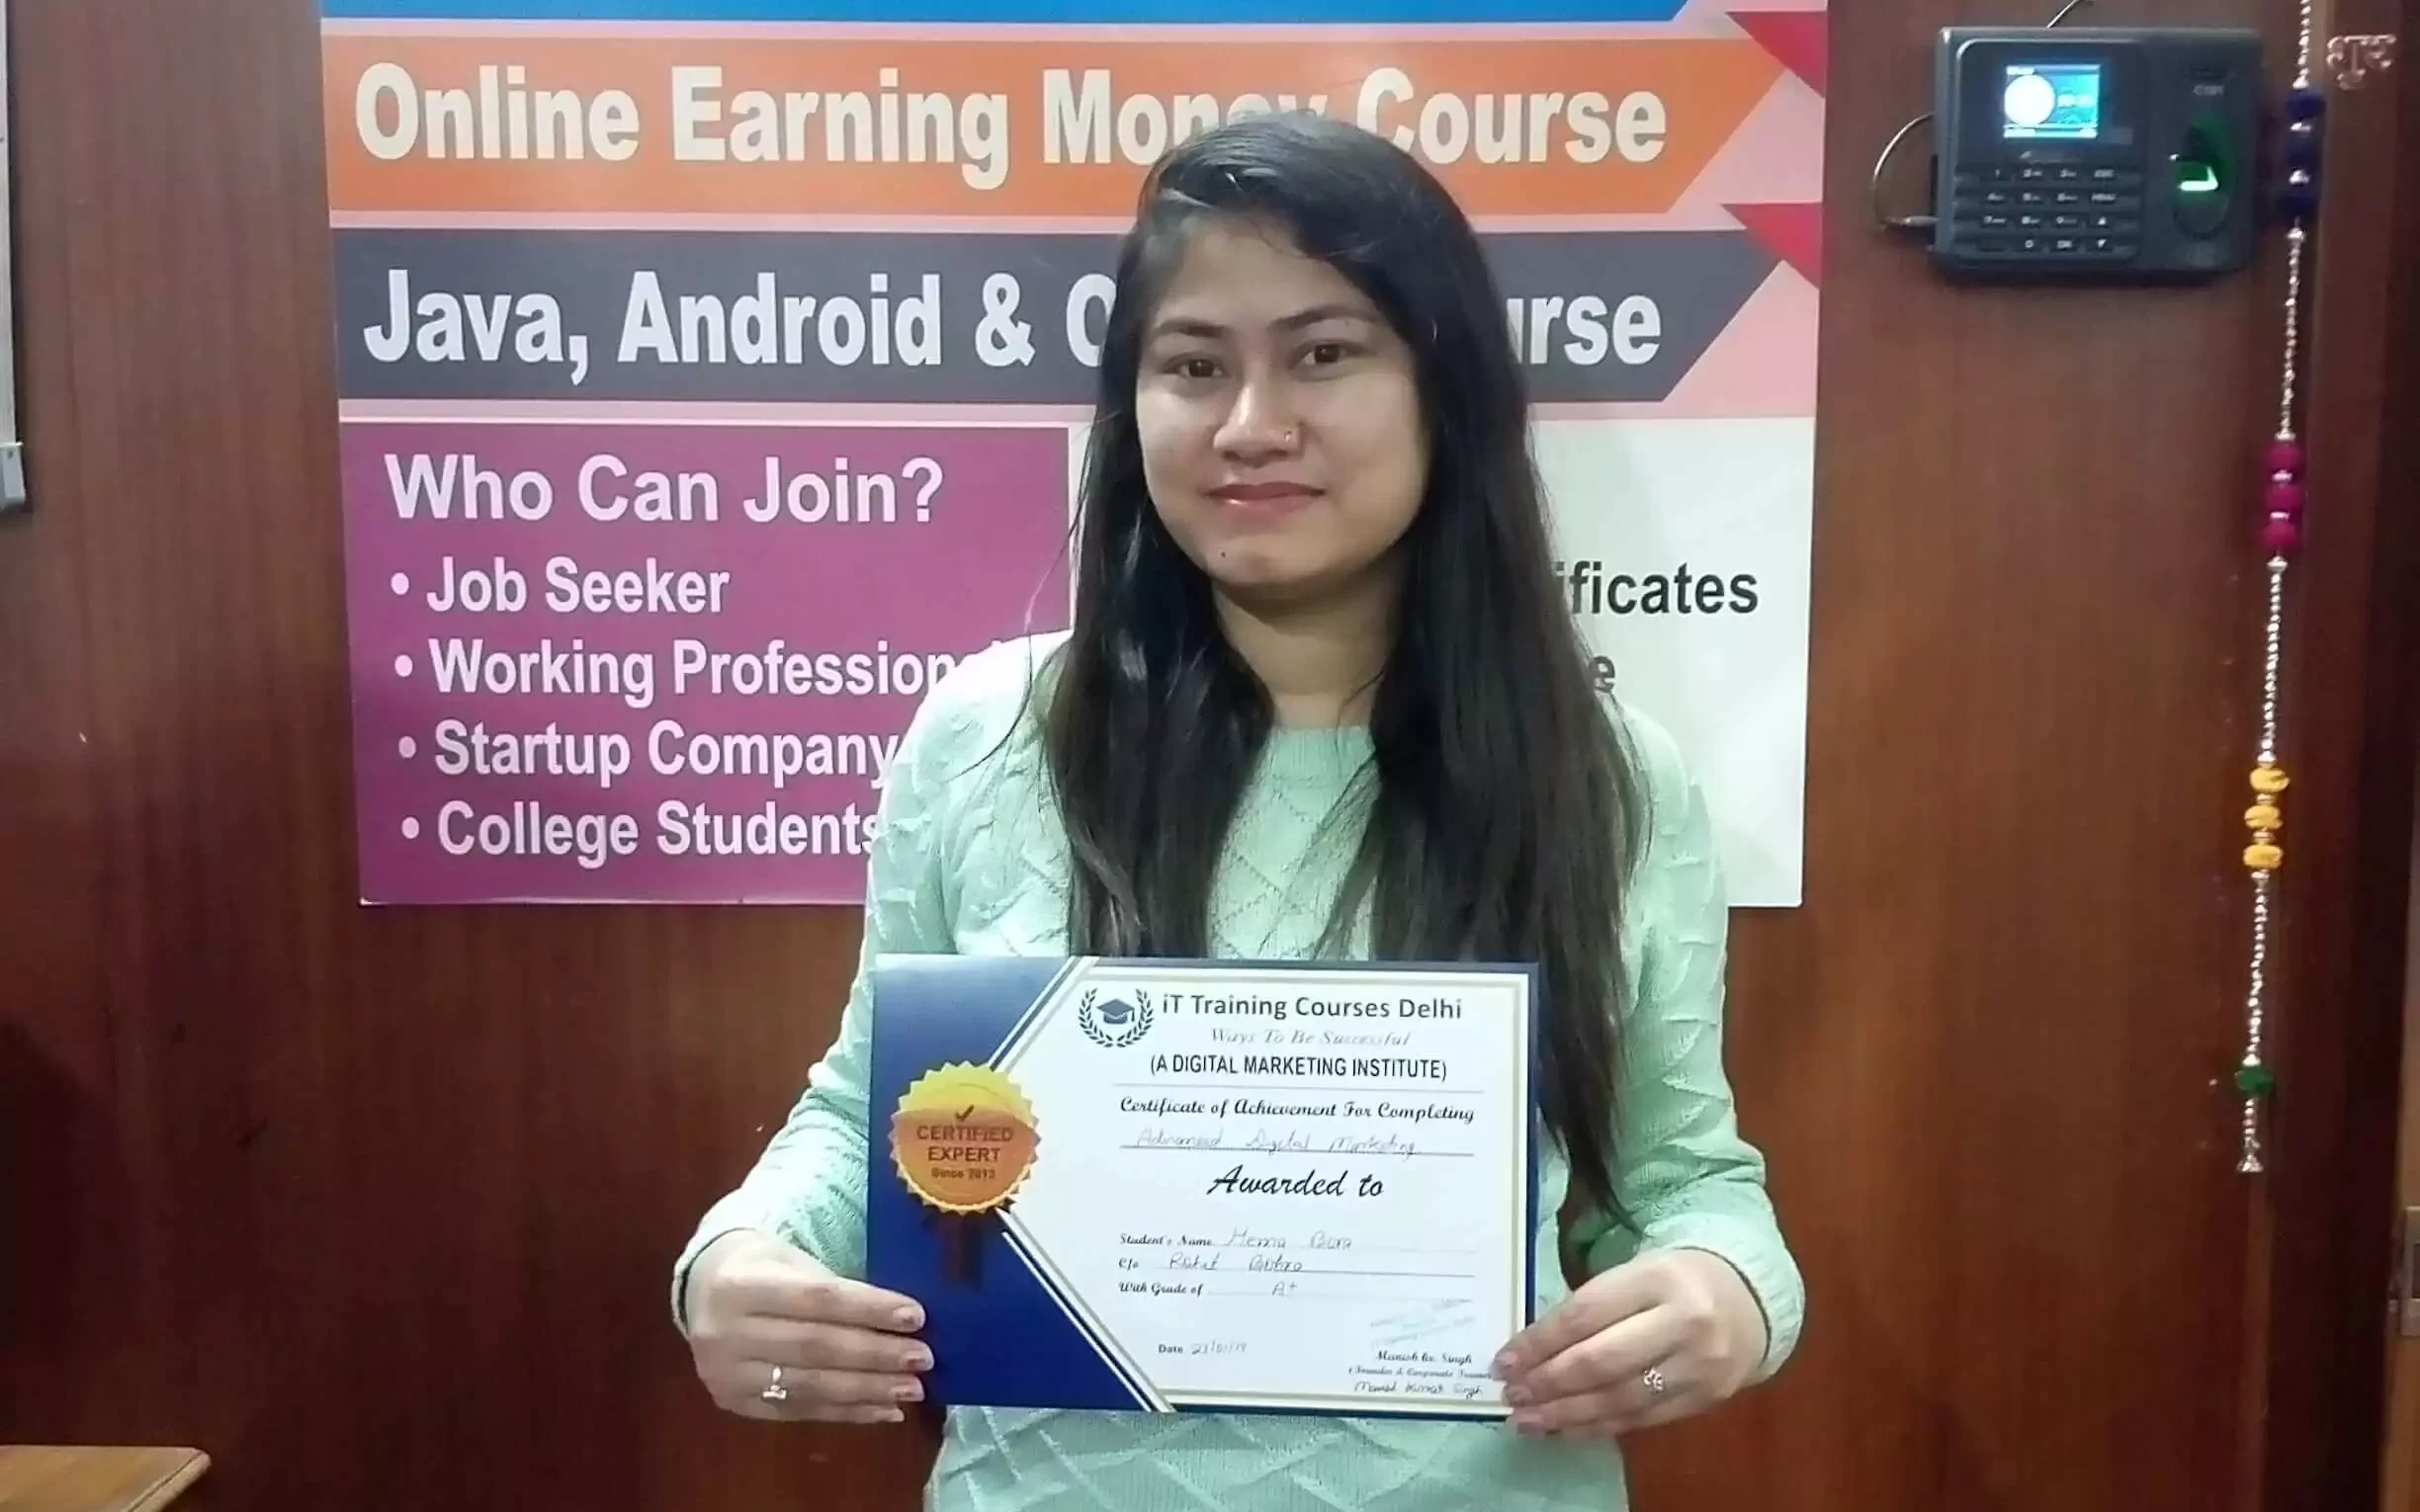 Digital Marketing Institute Certificate - ITTCD Student - Hema